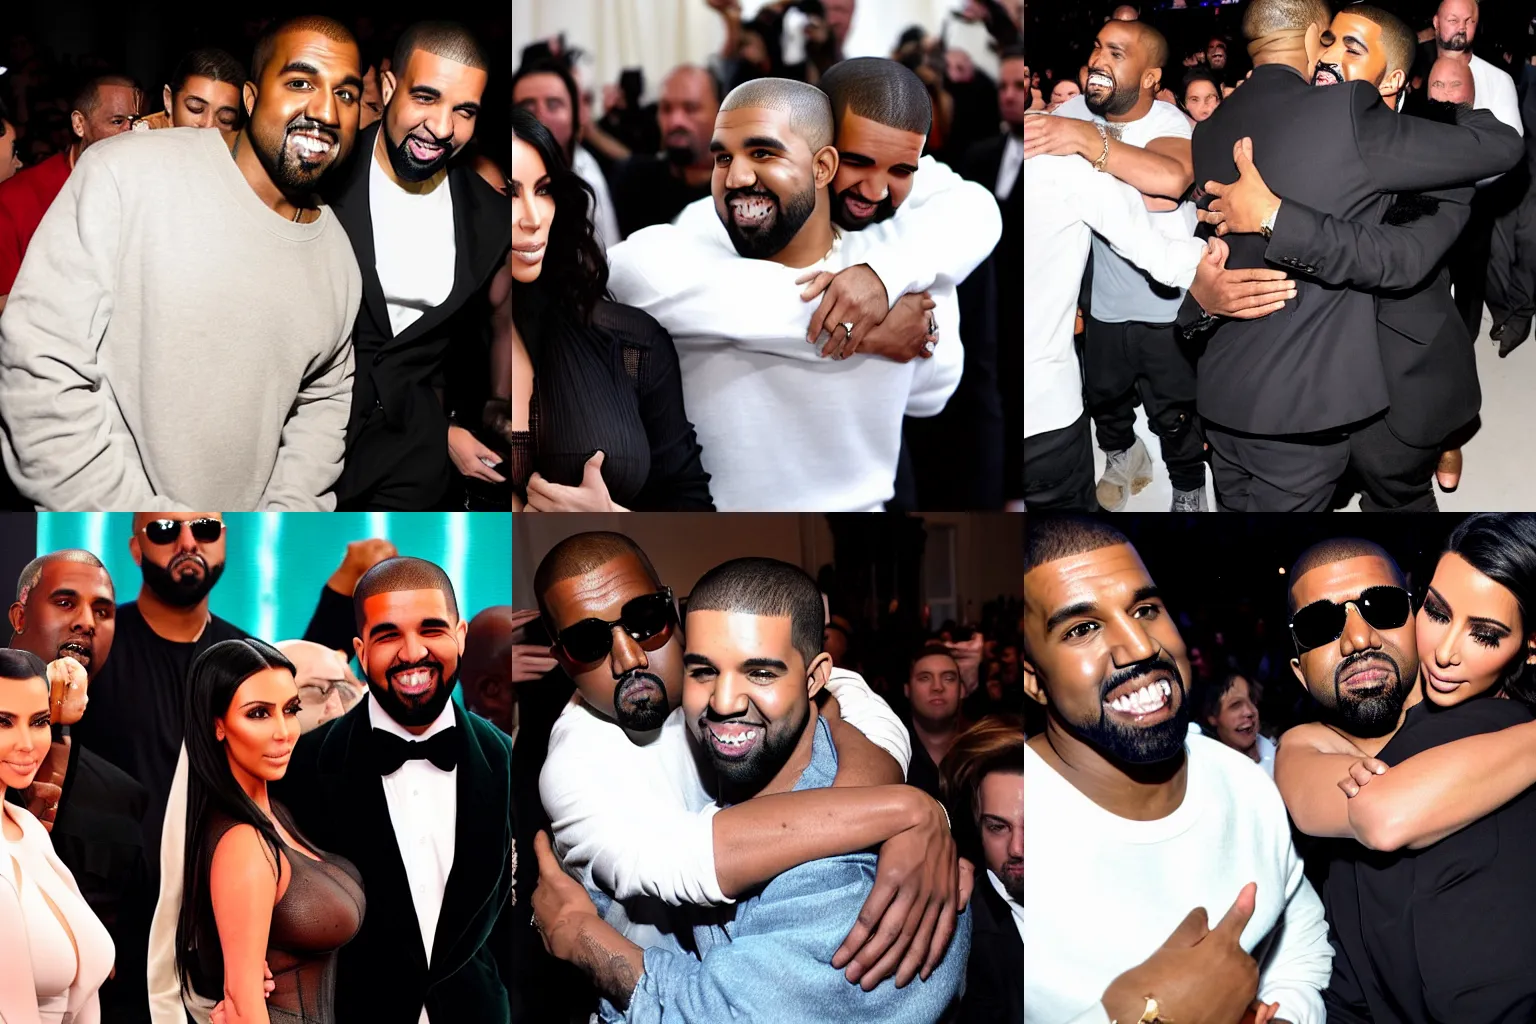 Prompt: Kanye west hugging drake while kim kardashian is jealous of them in background